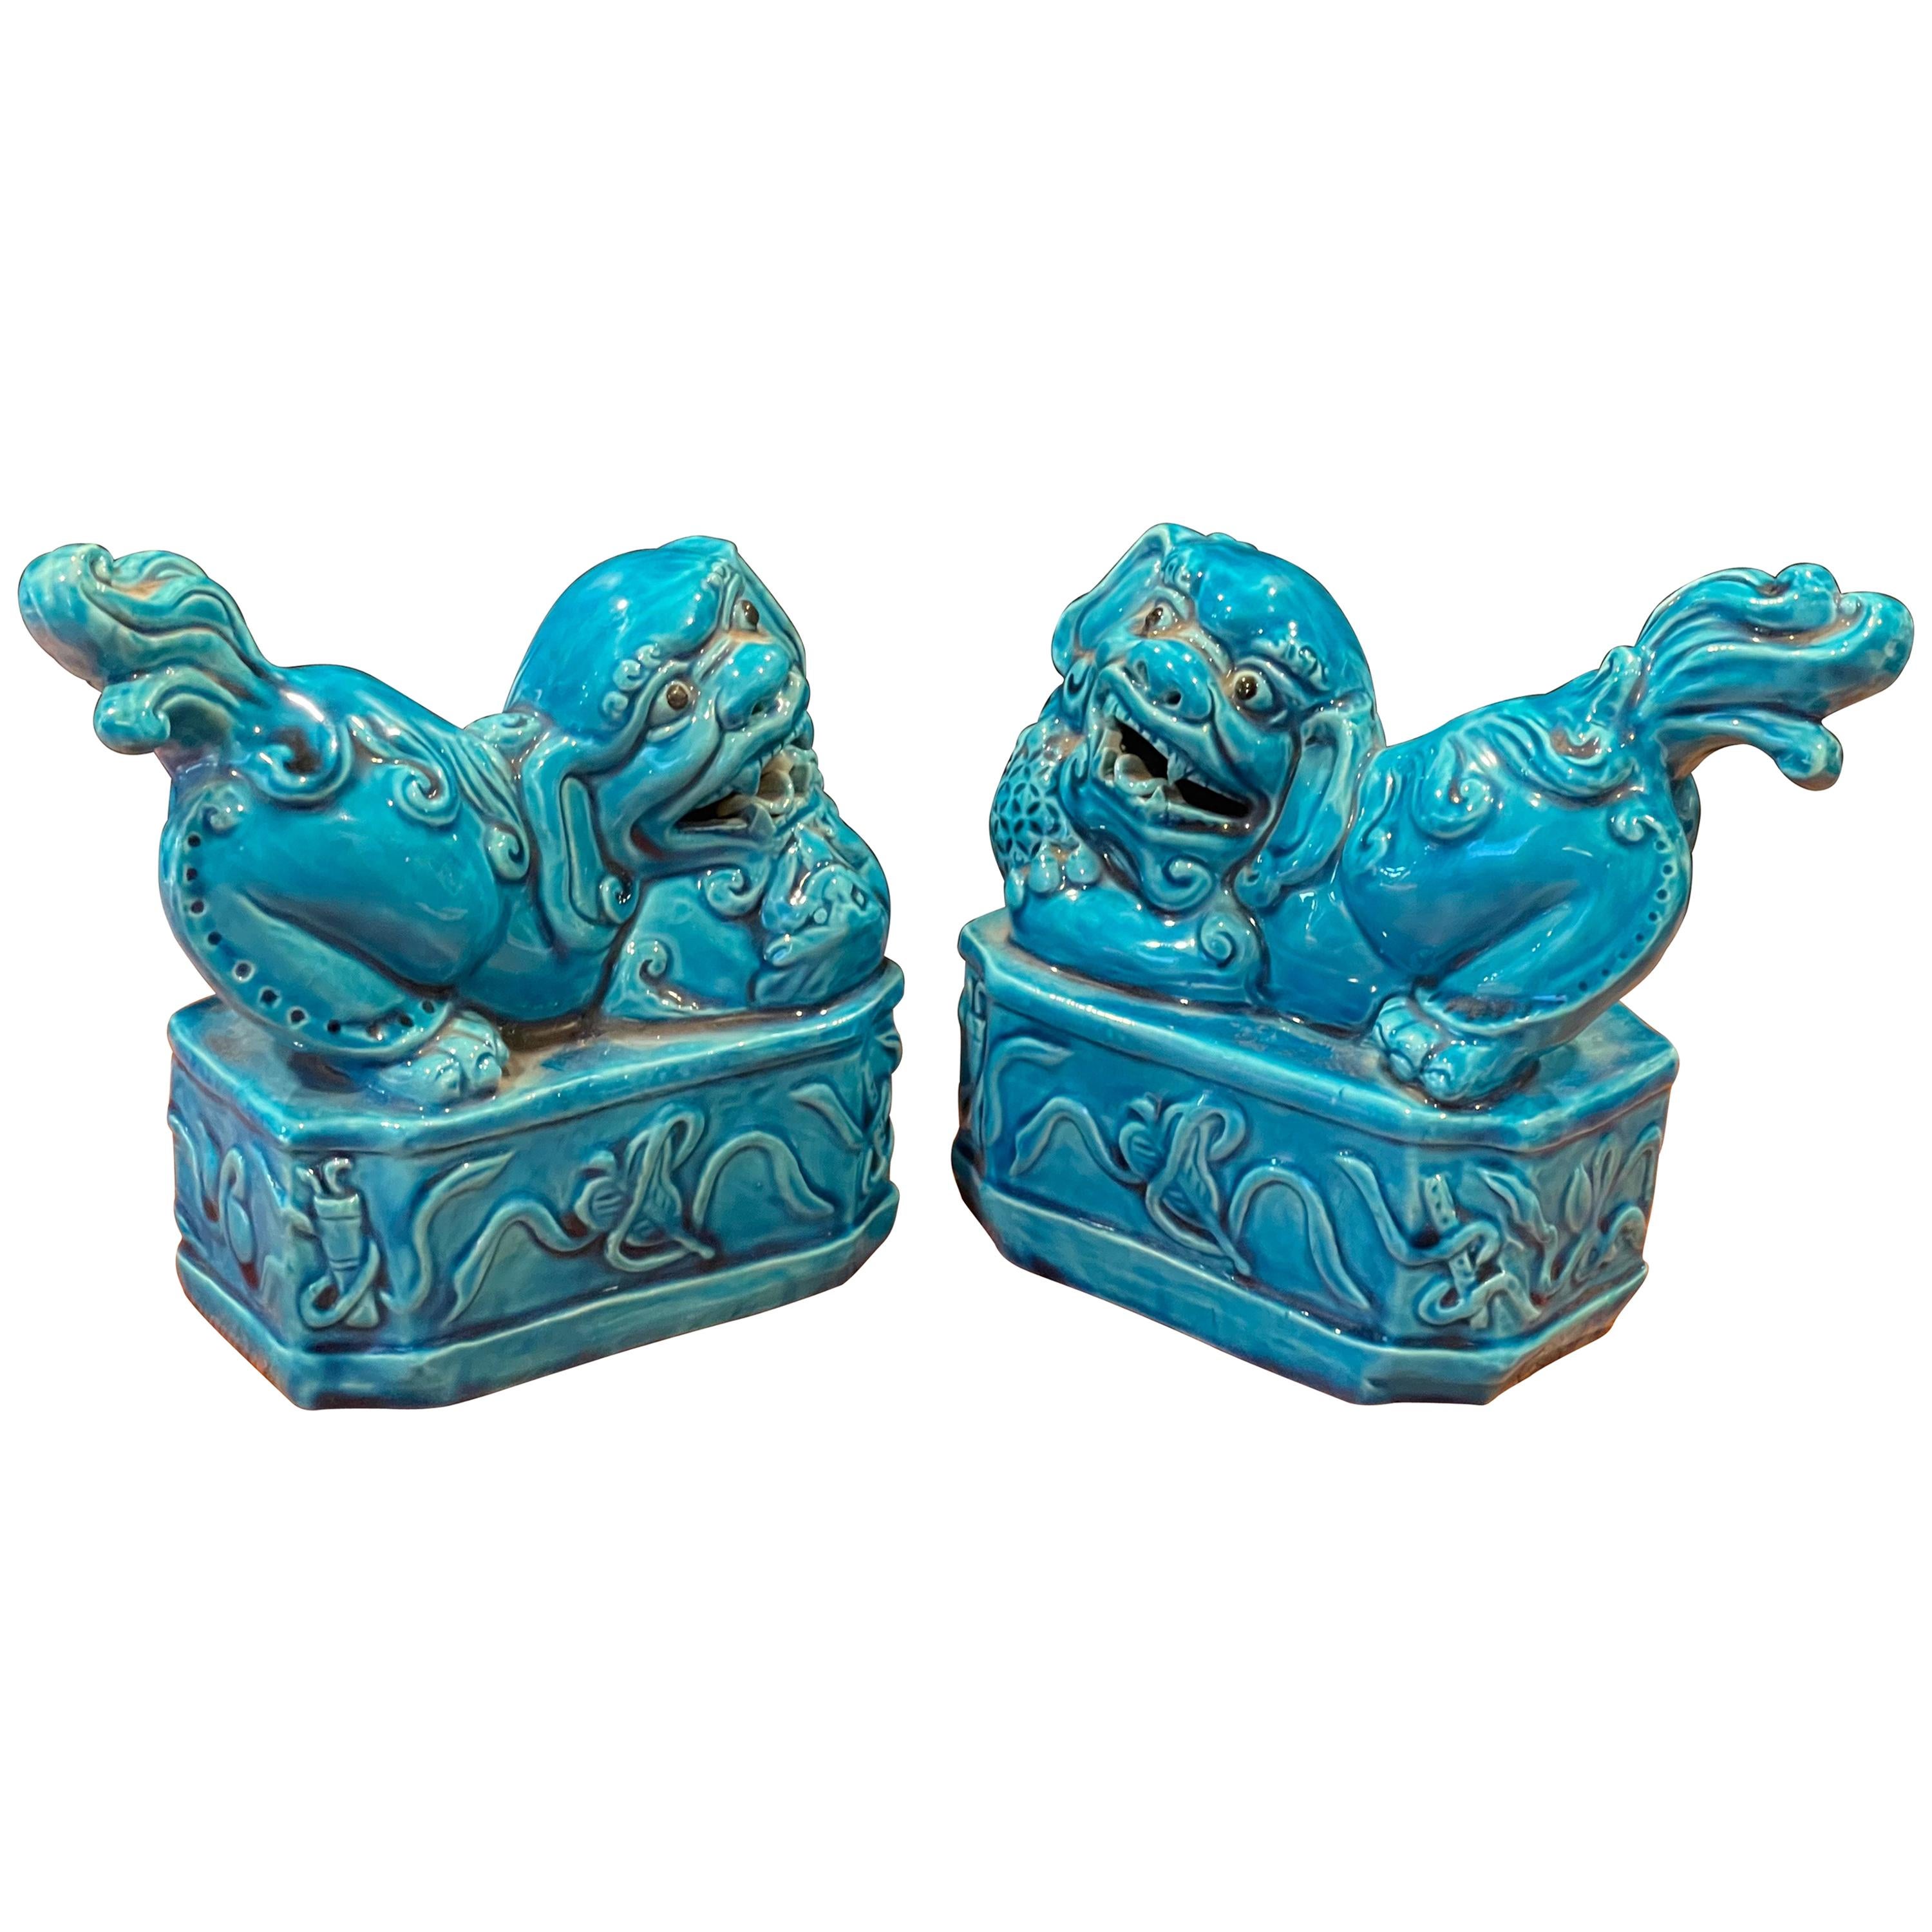 Pair of Mid-Century Aqua Ceramic Foo Dogs / Bookends For Sale